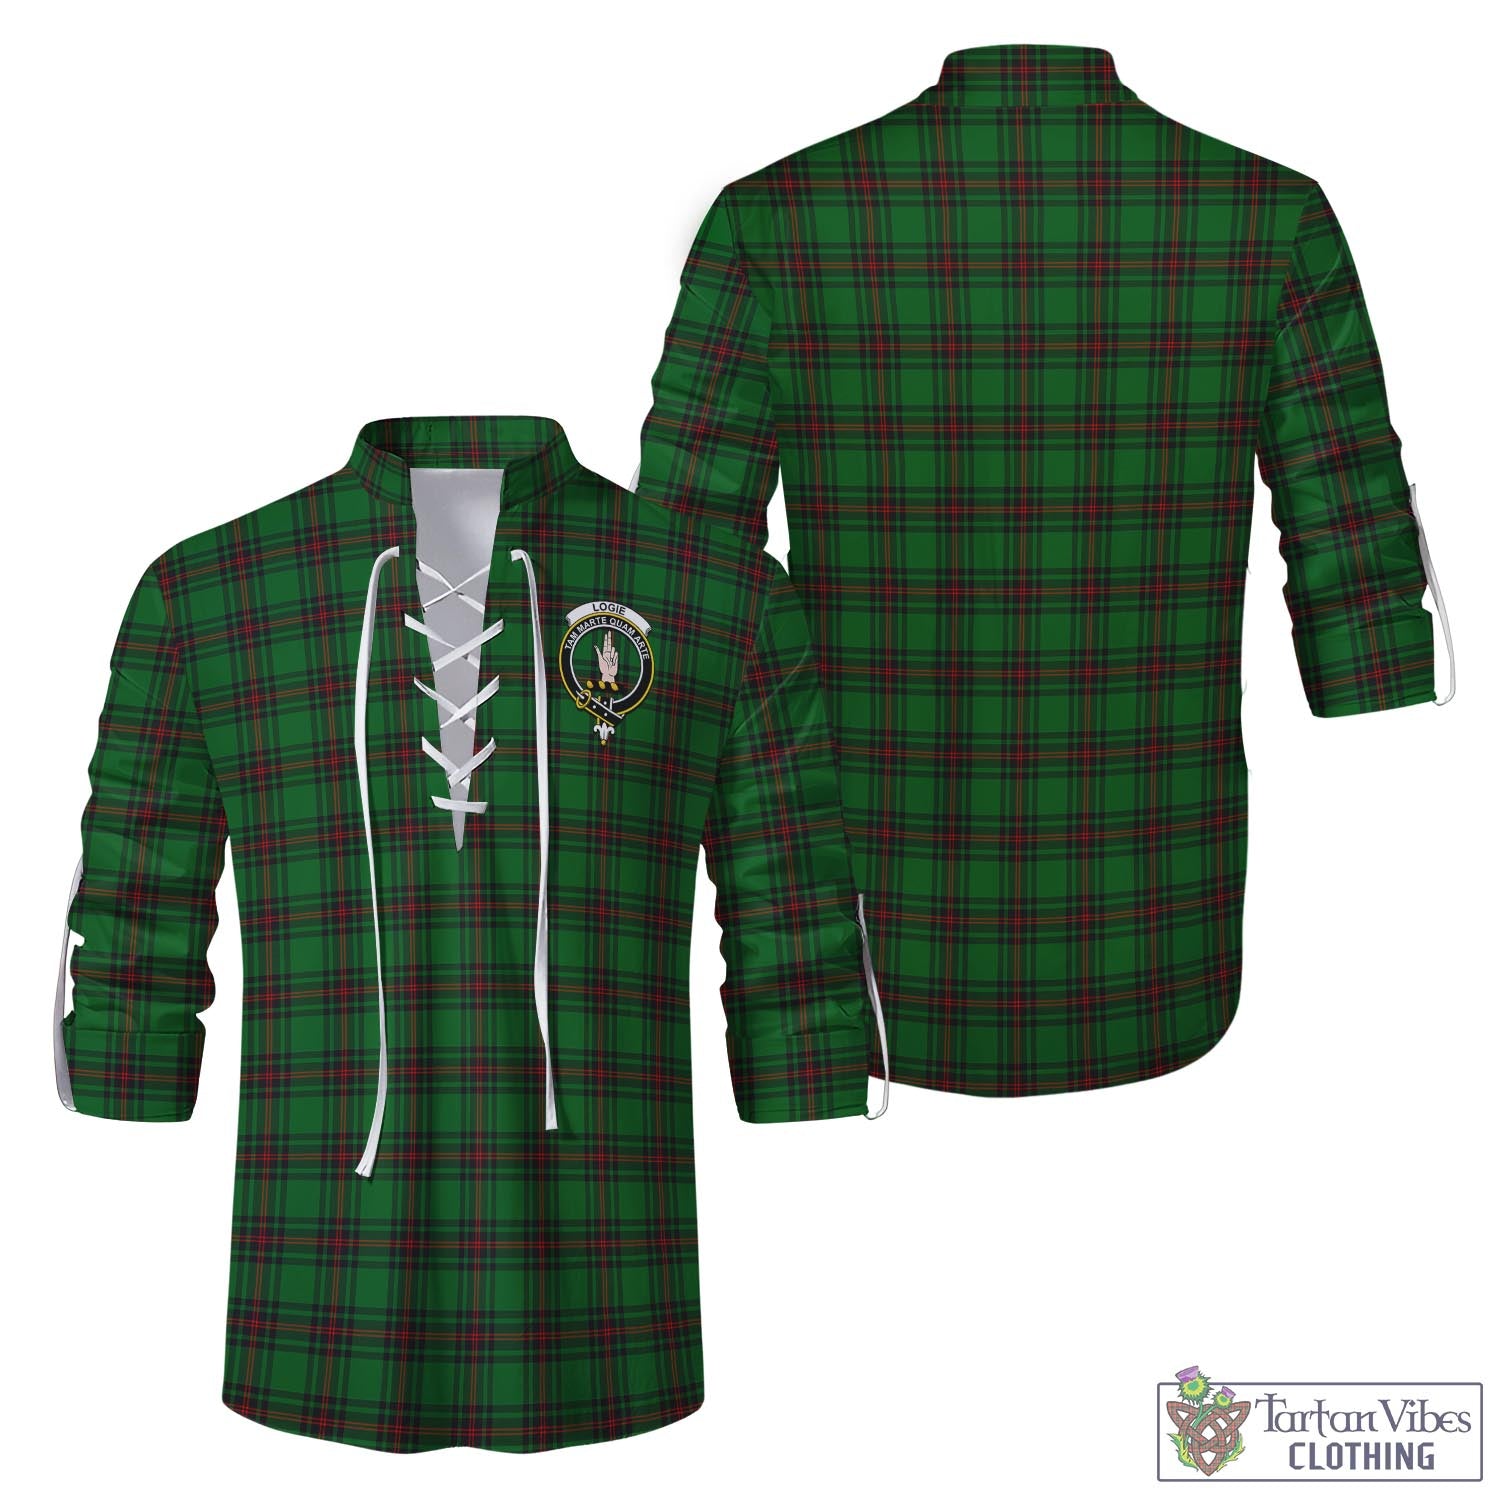 Tartan Vibes Clothing Logie Tartan Men's Scottish Traditional Jacobite Ghillie Kilt Shirt with Family Crest